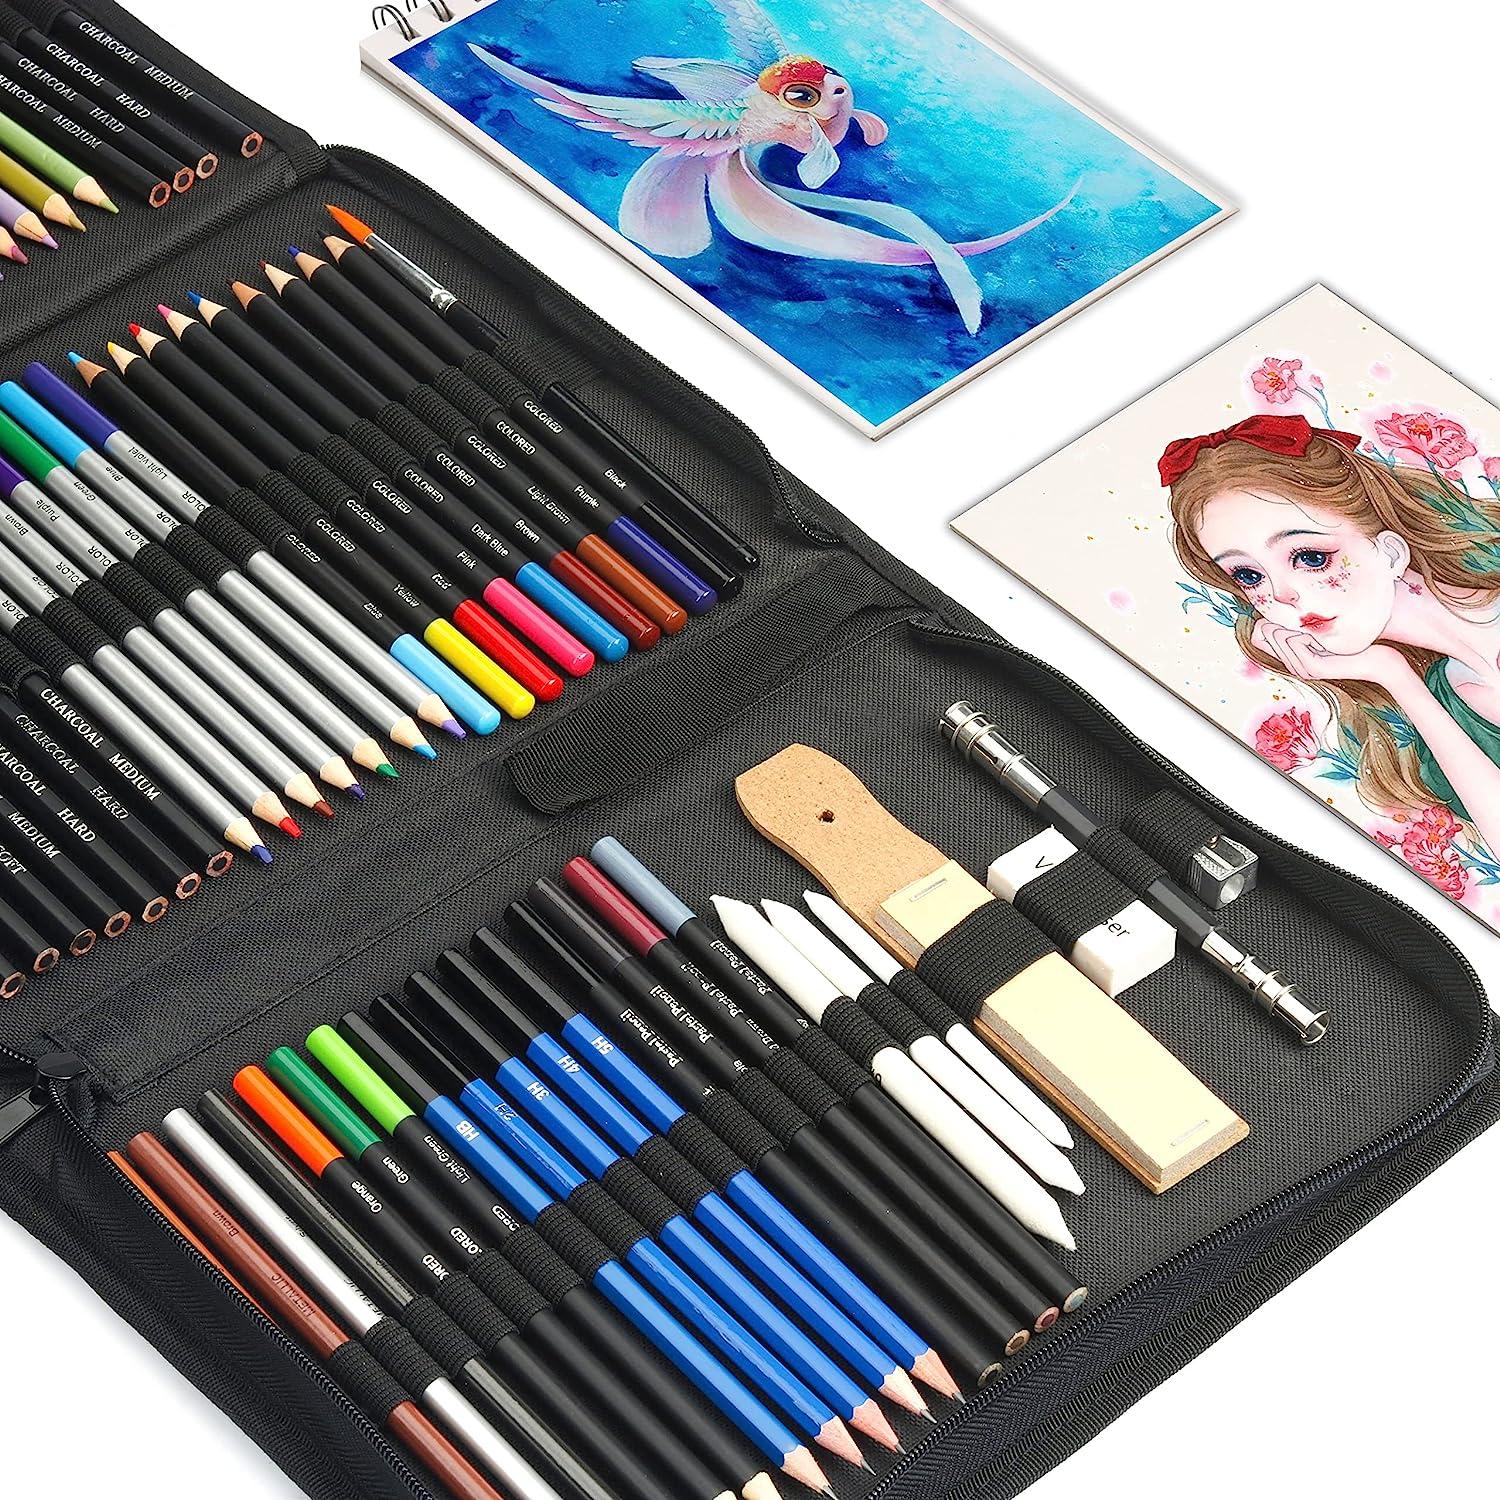 Sketch Pencils Art Supplies Kit Professional Sketching Art Graphite  Charcoal SET